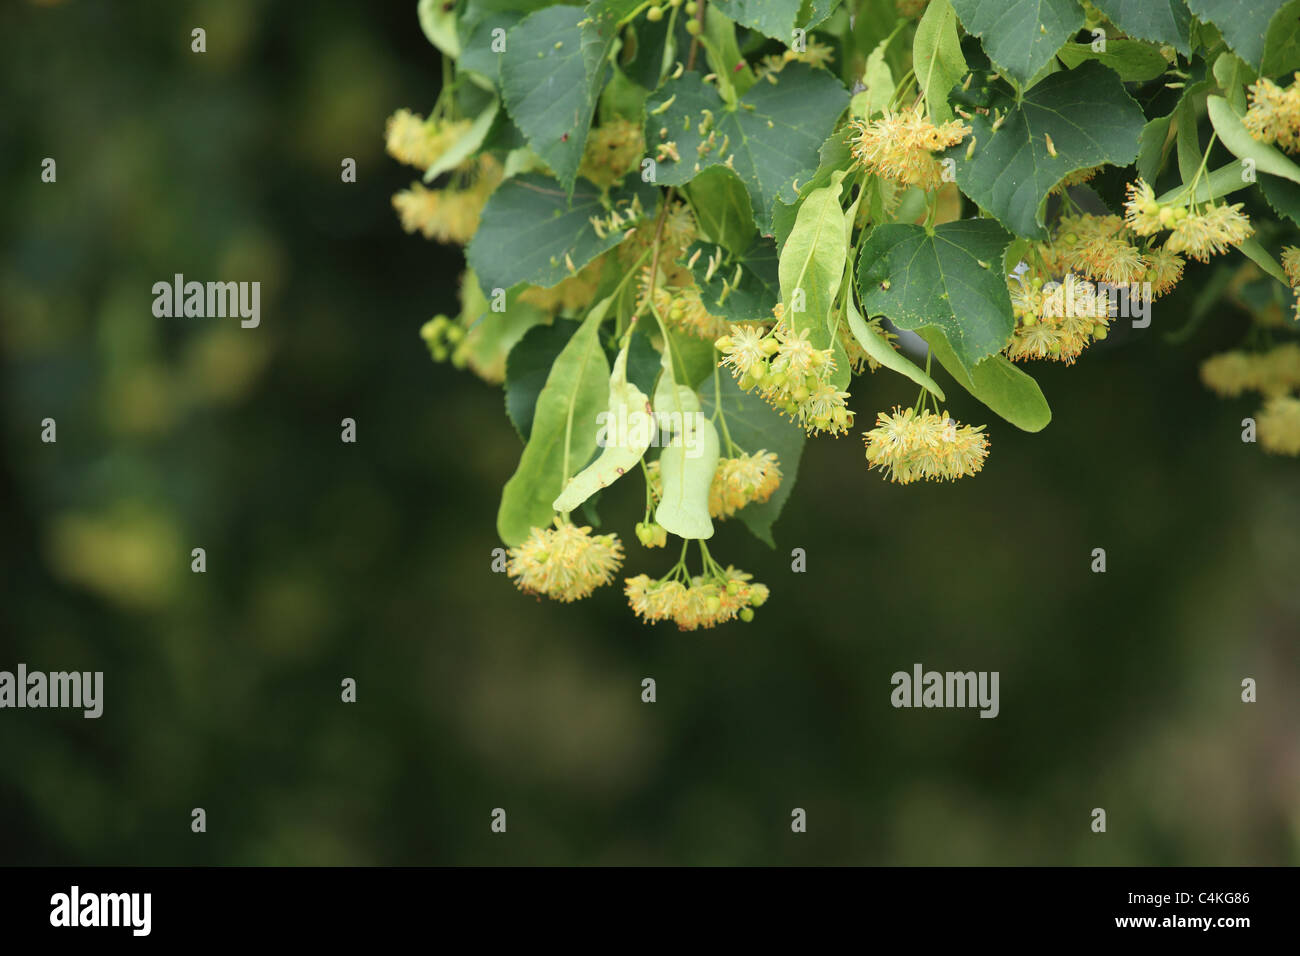 Small-leaved Lime tree (Tilia cordata) flowering. Location: Male Karpaty, Slovakia. Stock Photo